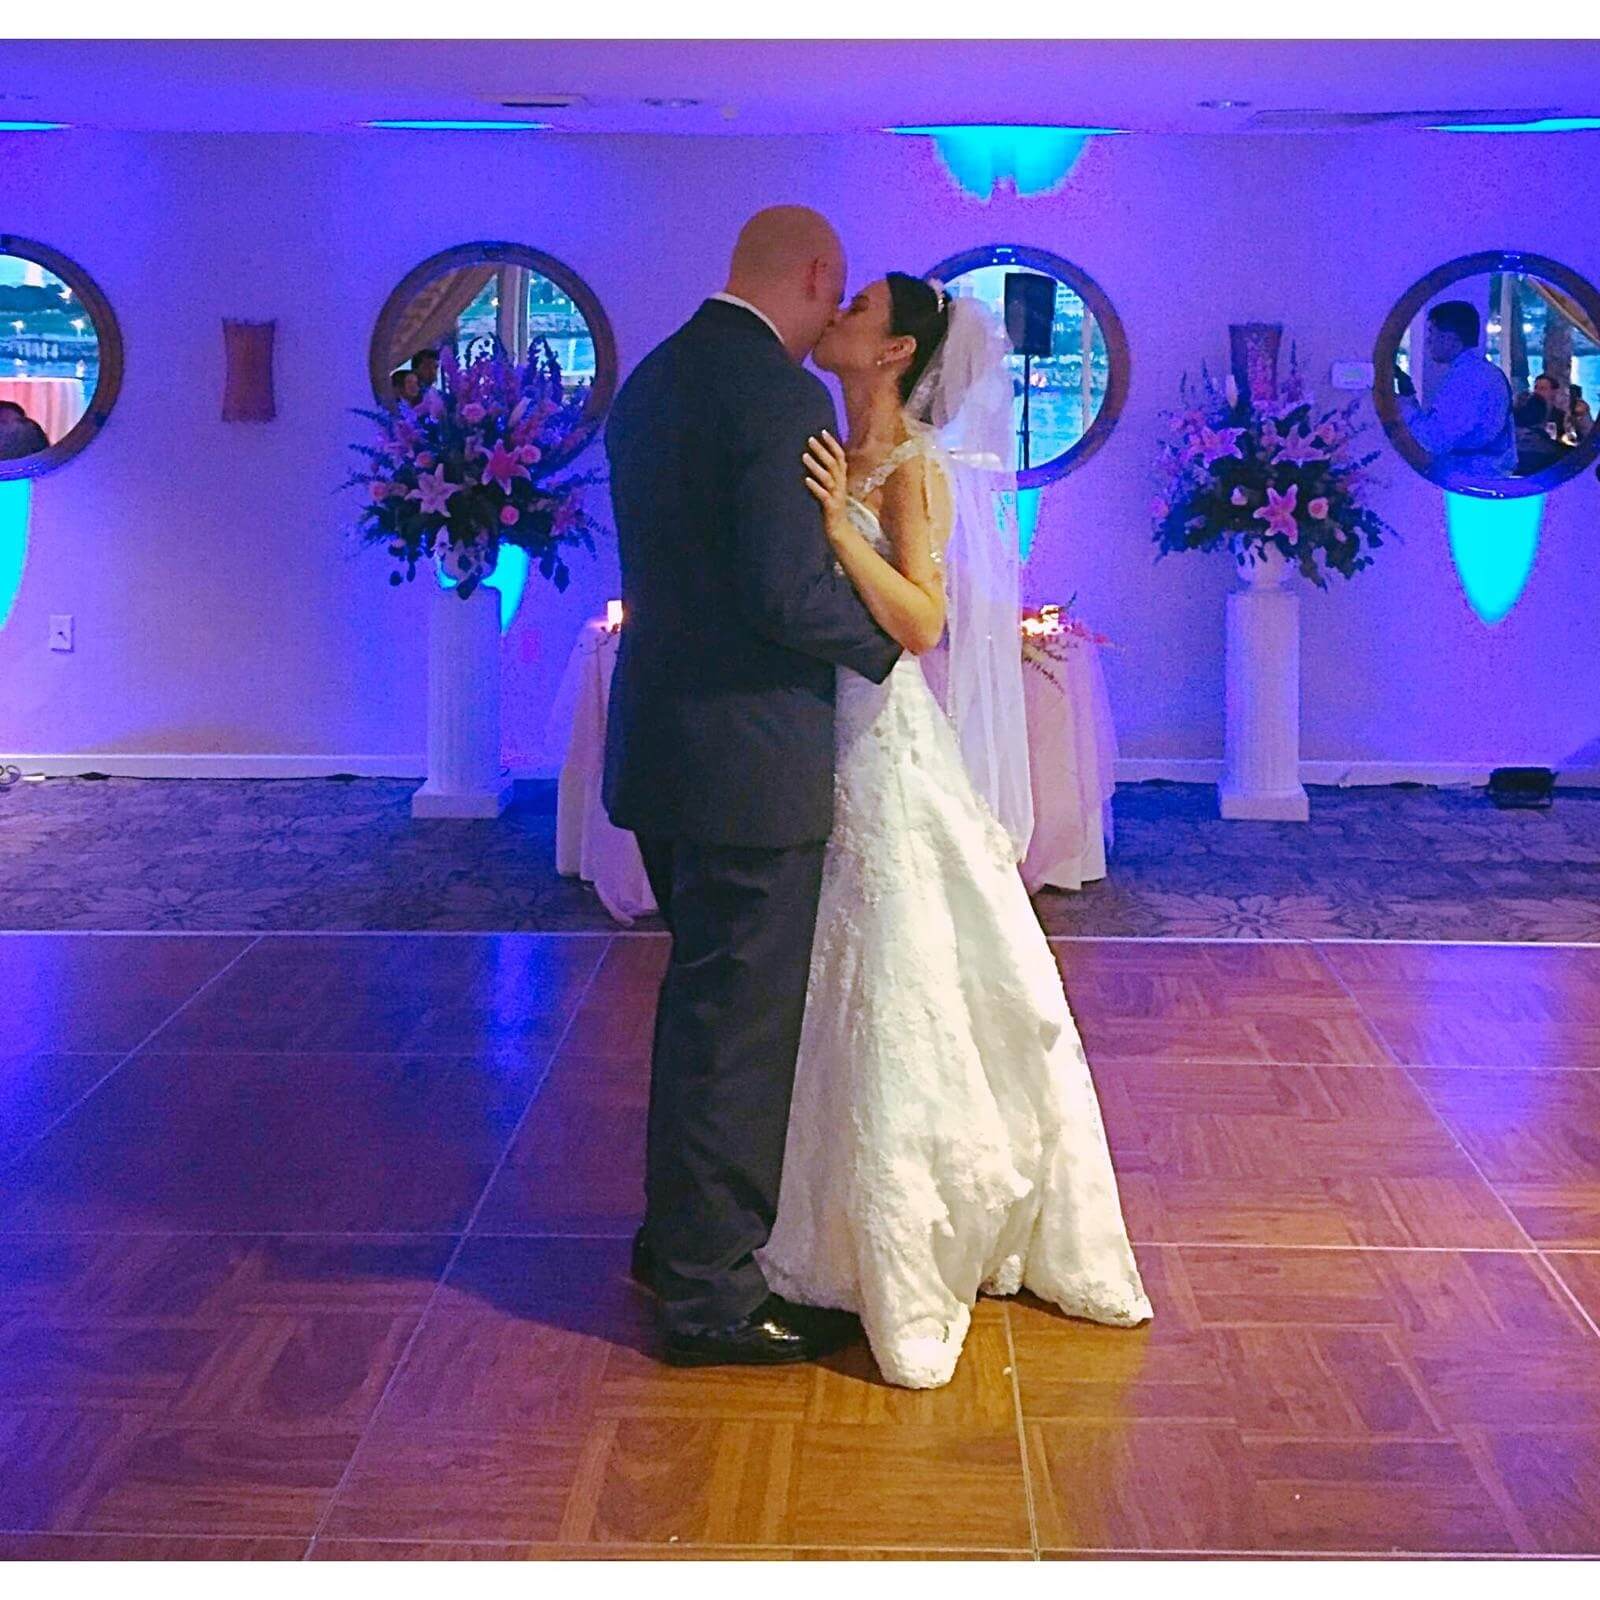 Congratulations Mr and Mrs Lane with their 1st dance as Husband and Wife. #kbdjs #kbdj #KBDJsEntertainment #uplighting